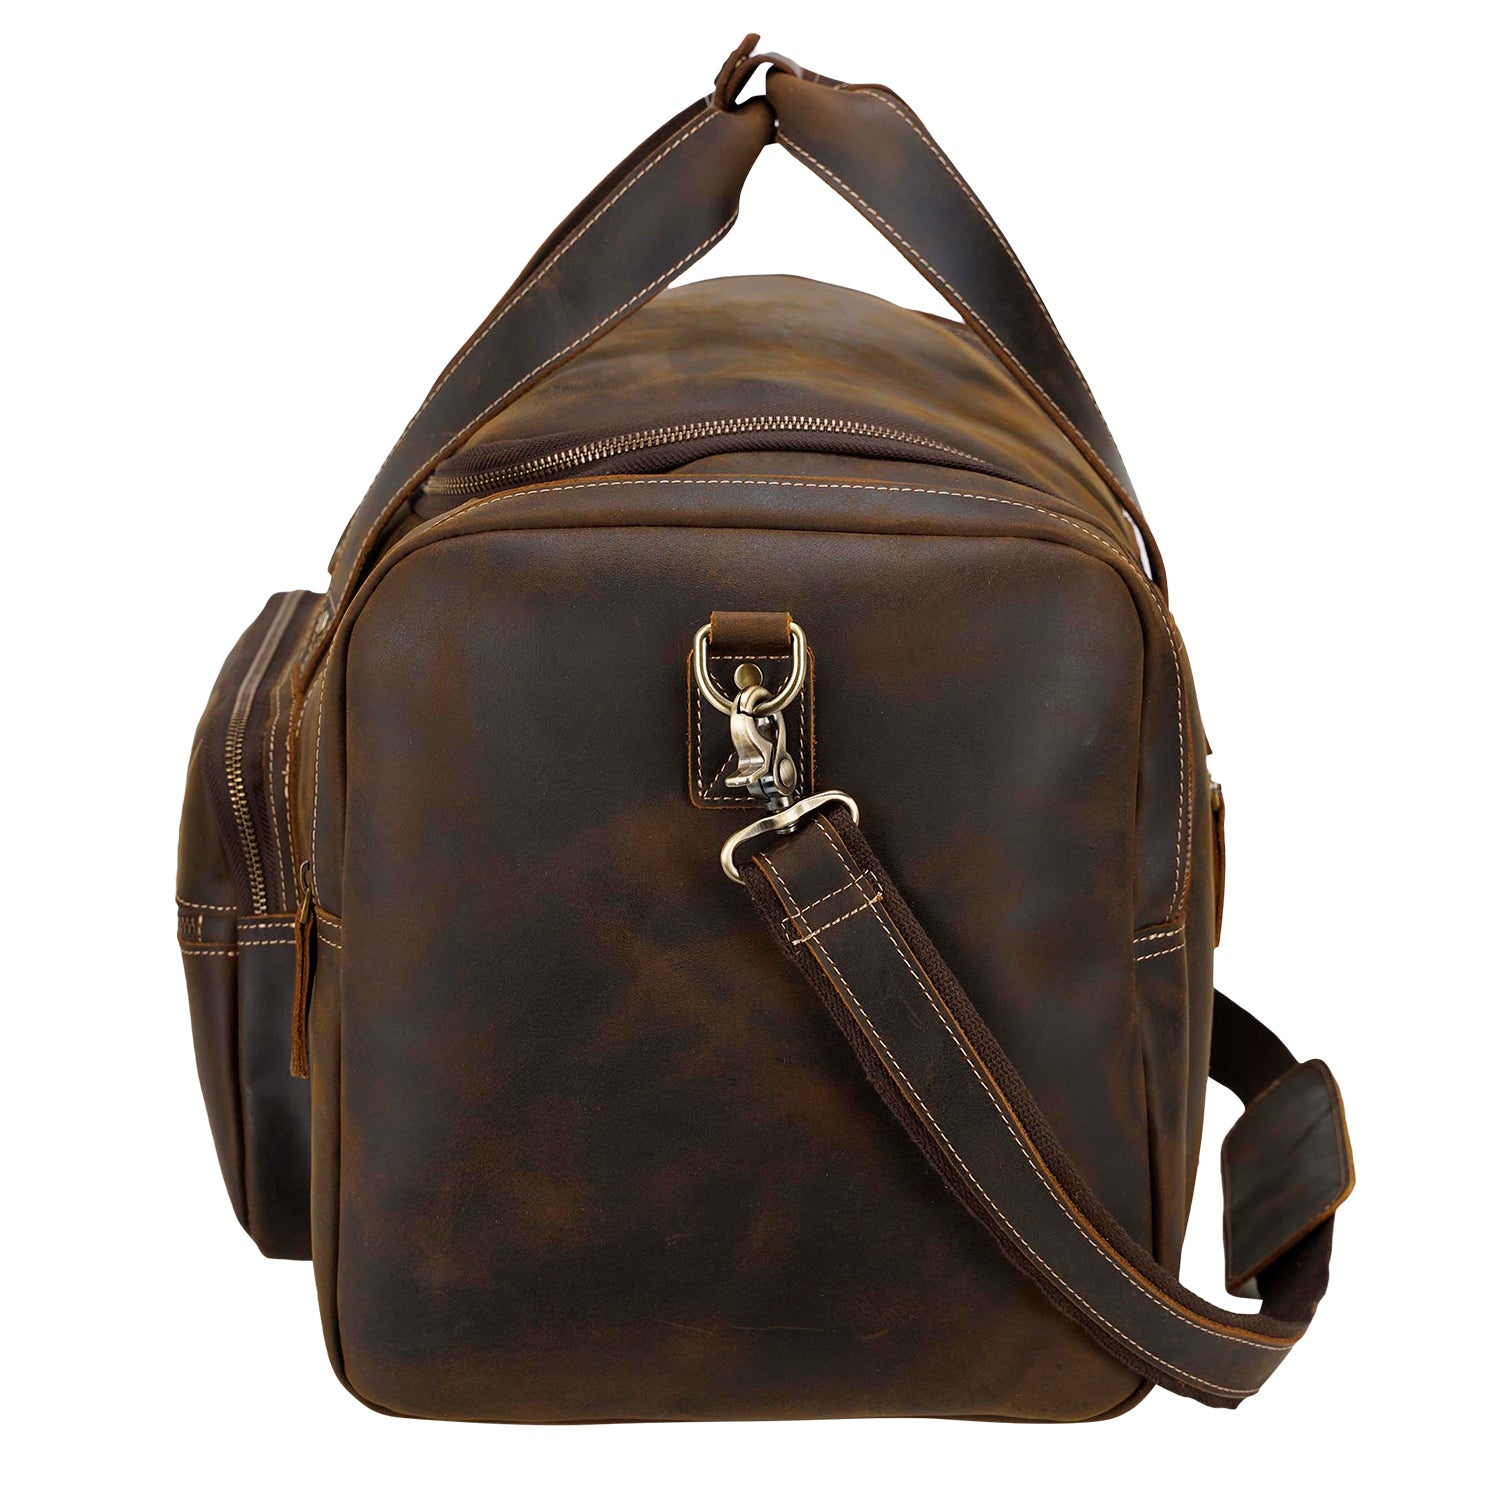 Polare 23" Full Grain Leather Gym Weekender Luggage Bag (Brown,Profile)